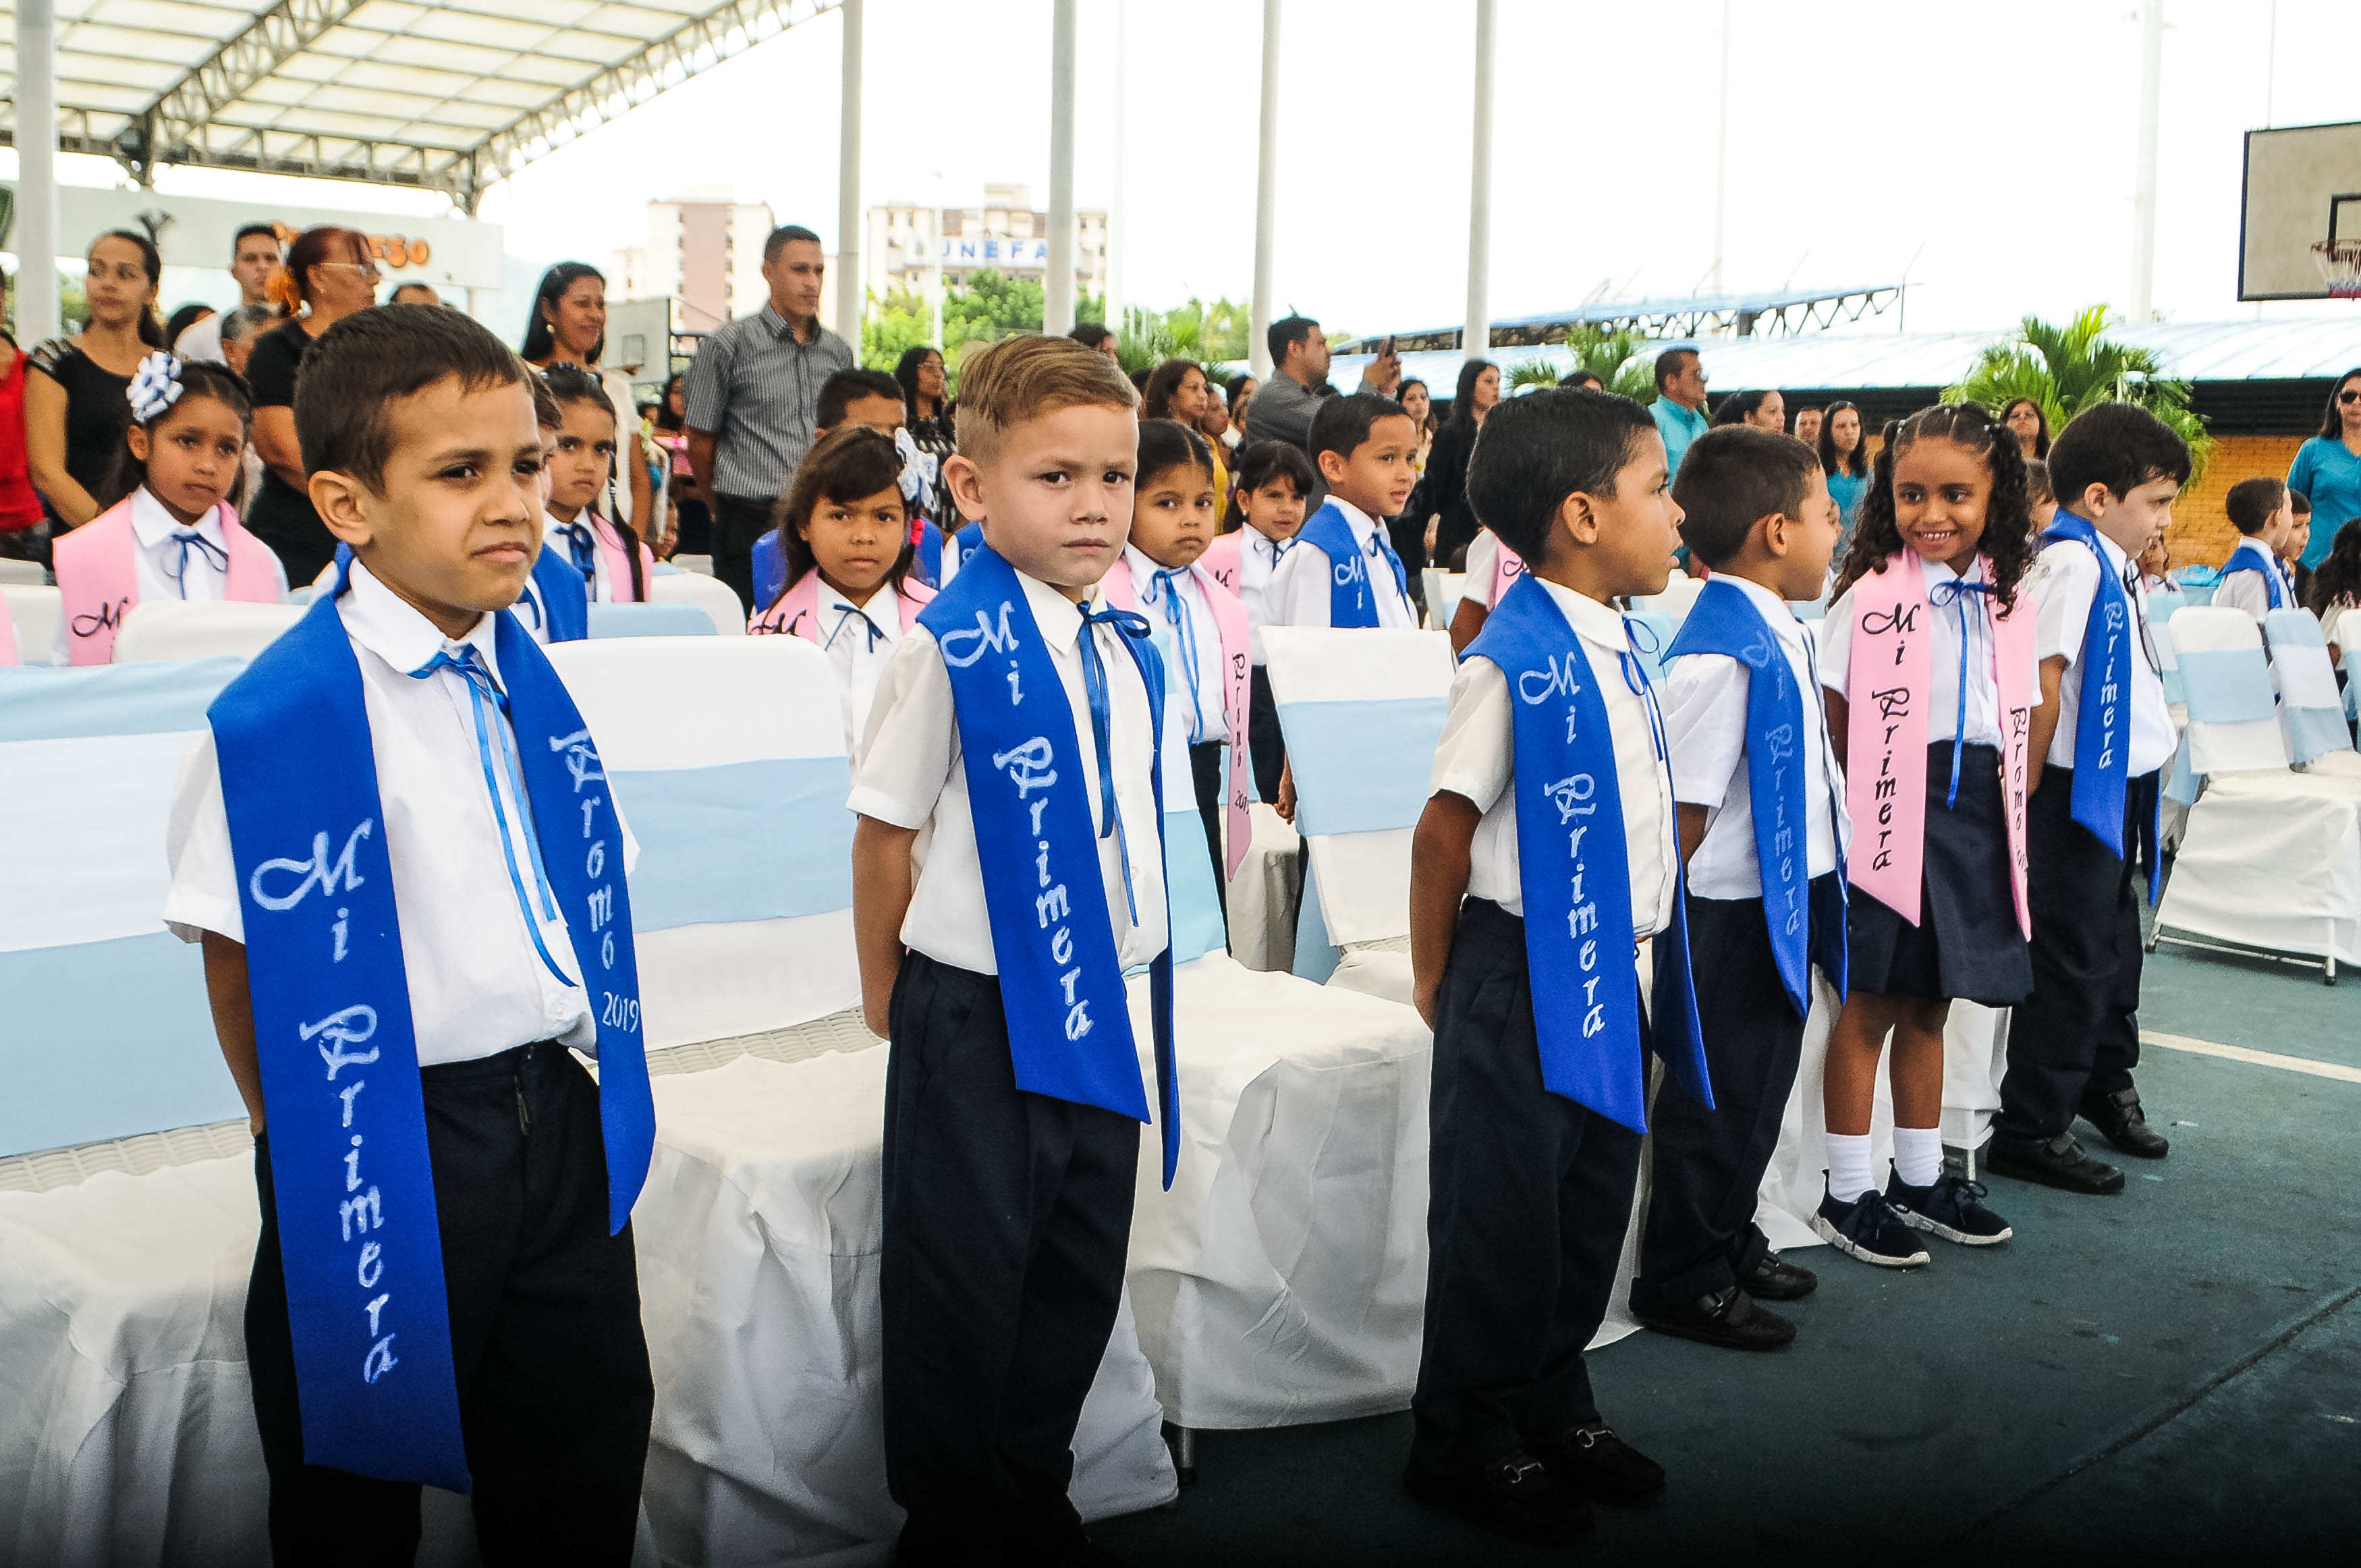 CEI Teoiste Arocha de Gallegos en Naguanagua graduó a 45 niños. ACN